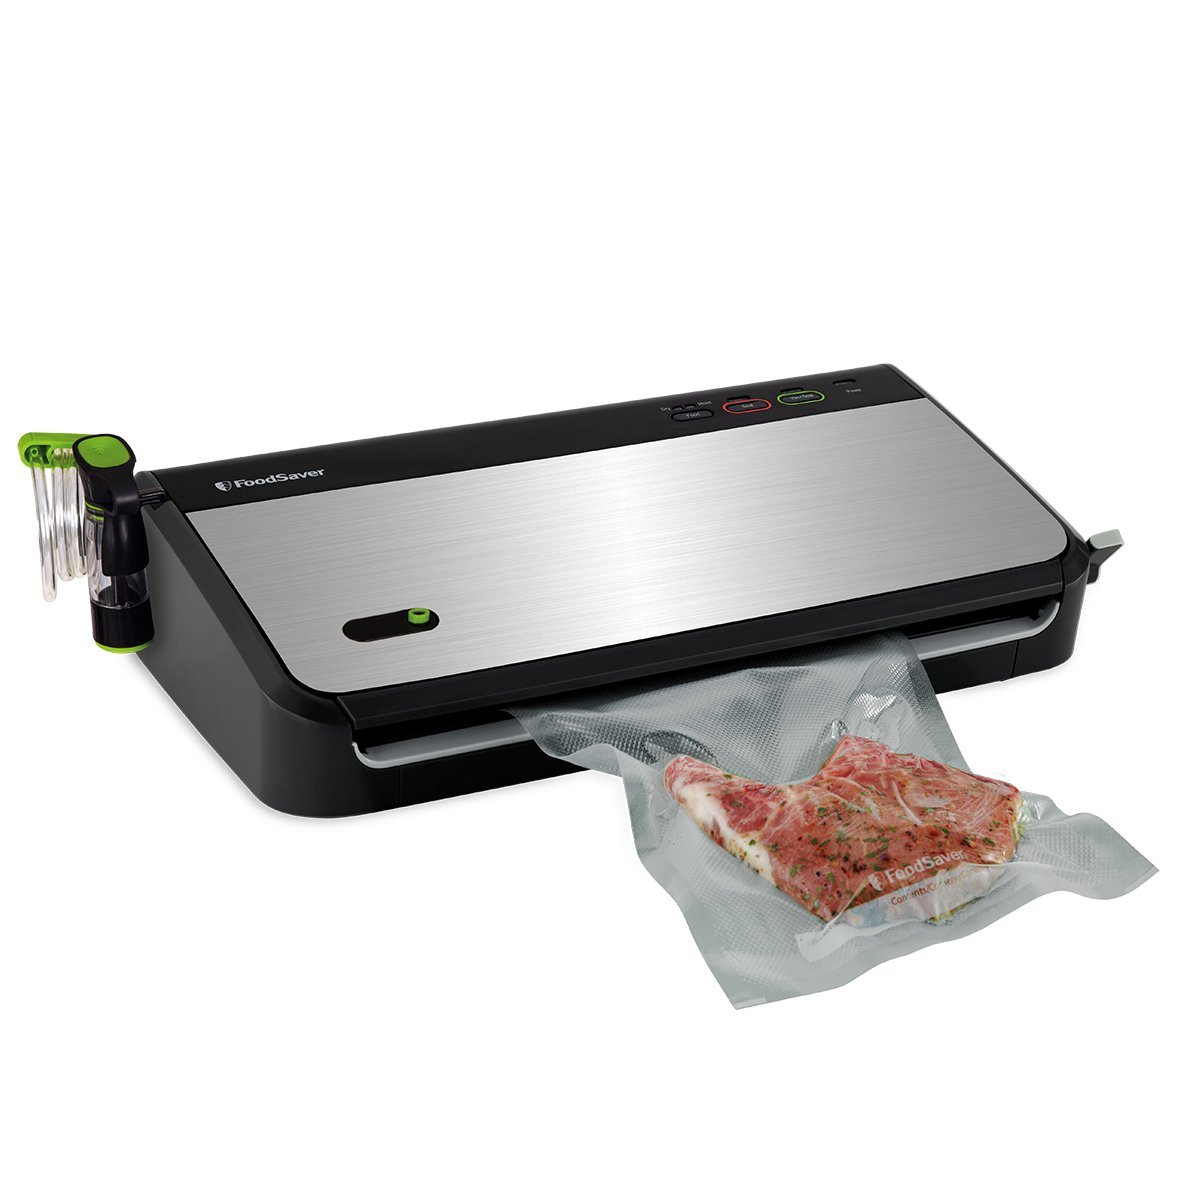 FoodSaver Vacuum Sealing System with Bonus Handheld Sealer and Starter Kit – Just $109.99!